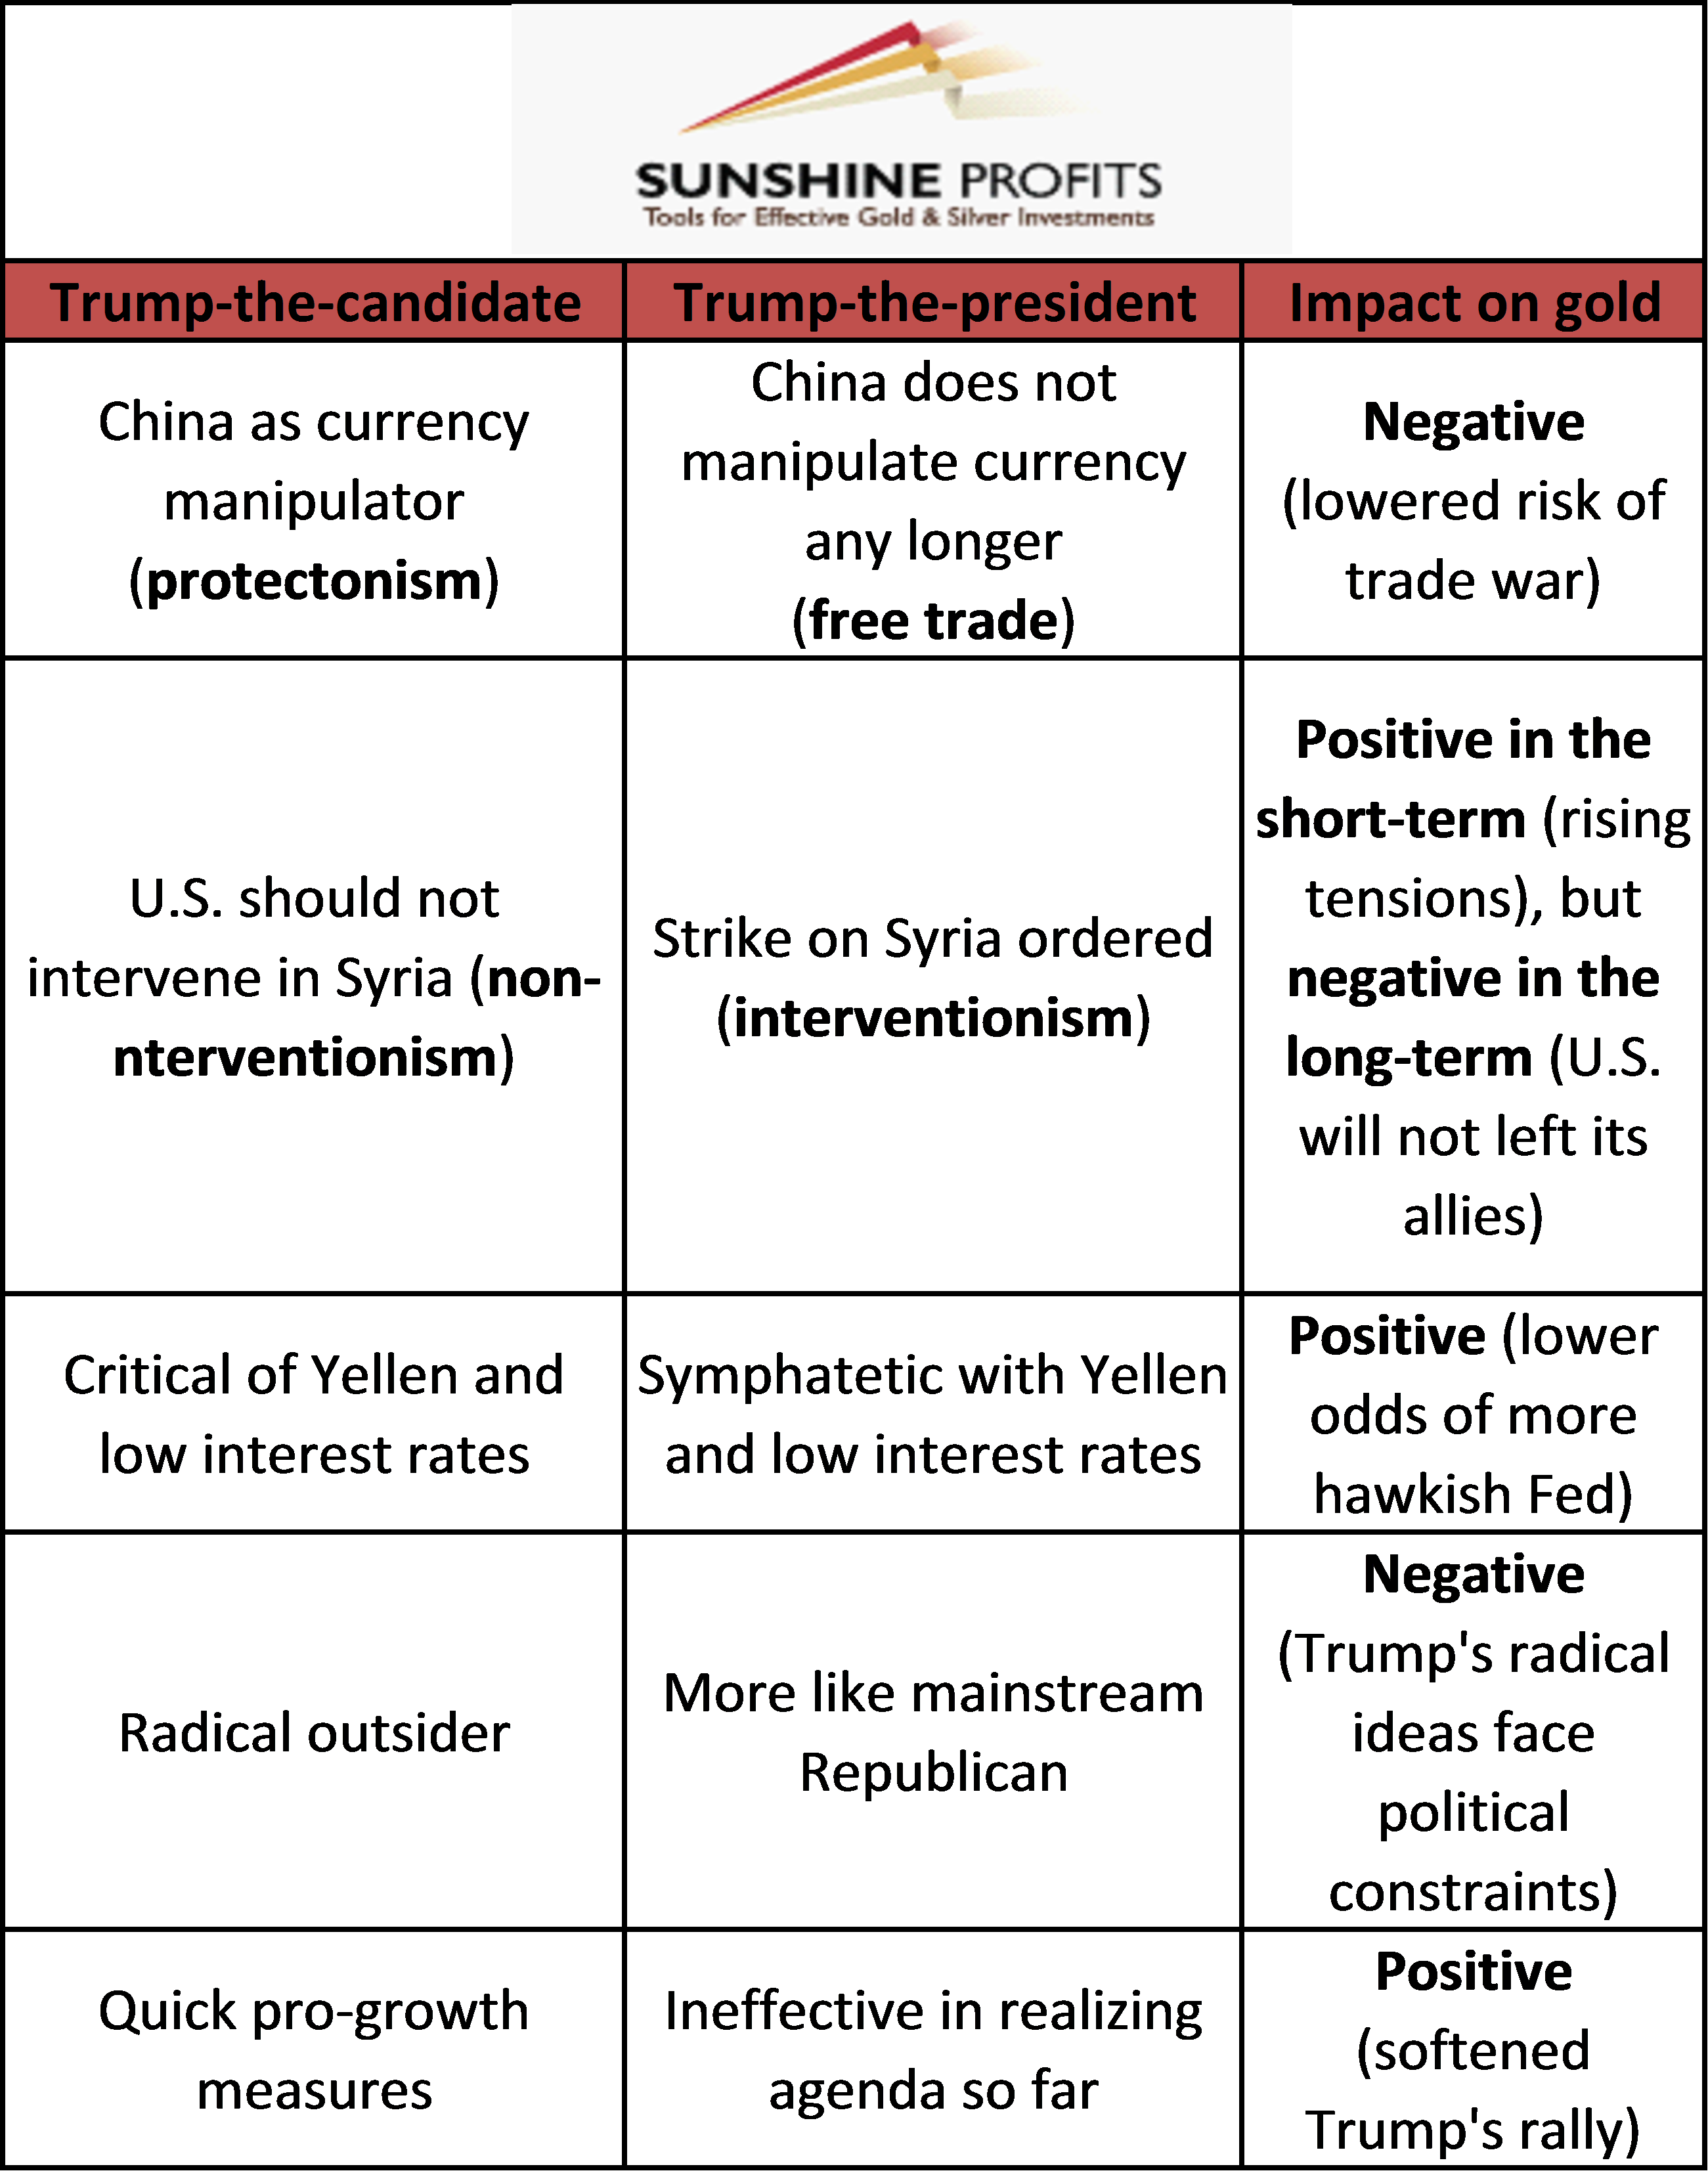 Trump-the-president vs. Trump-the-candidate